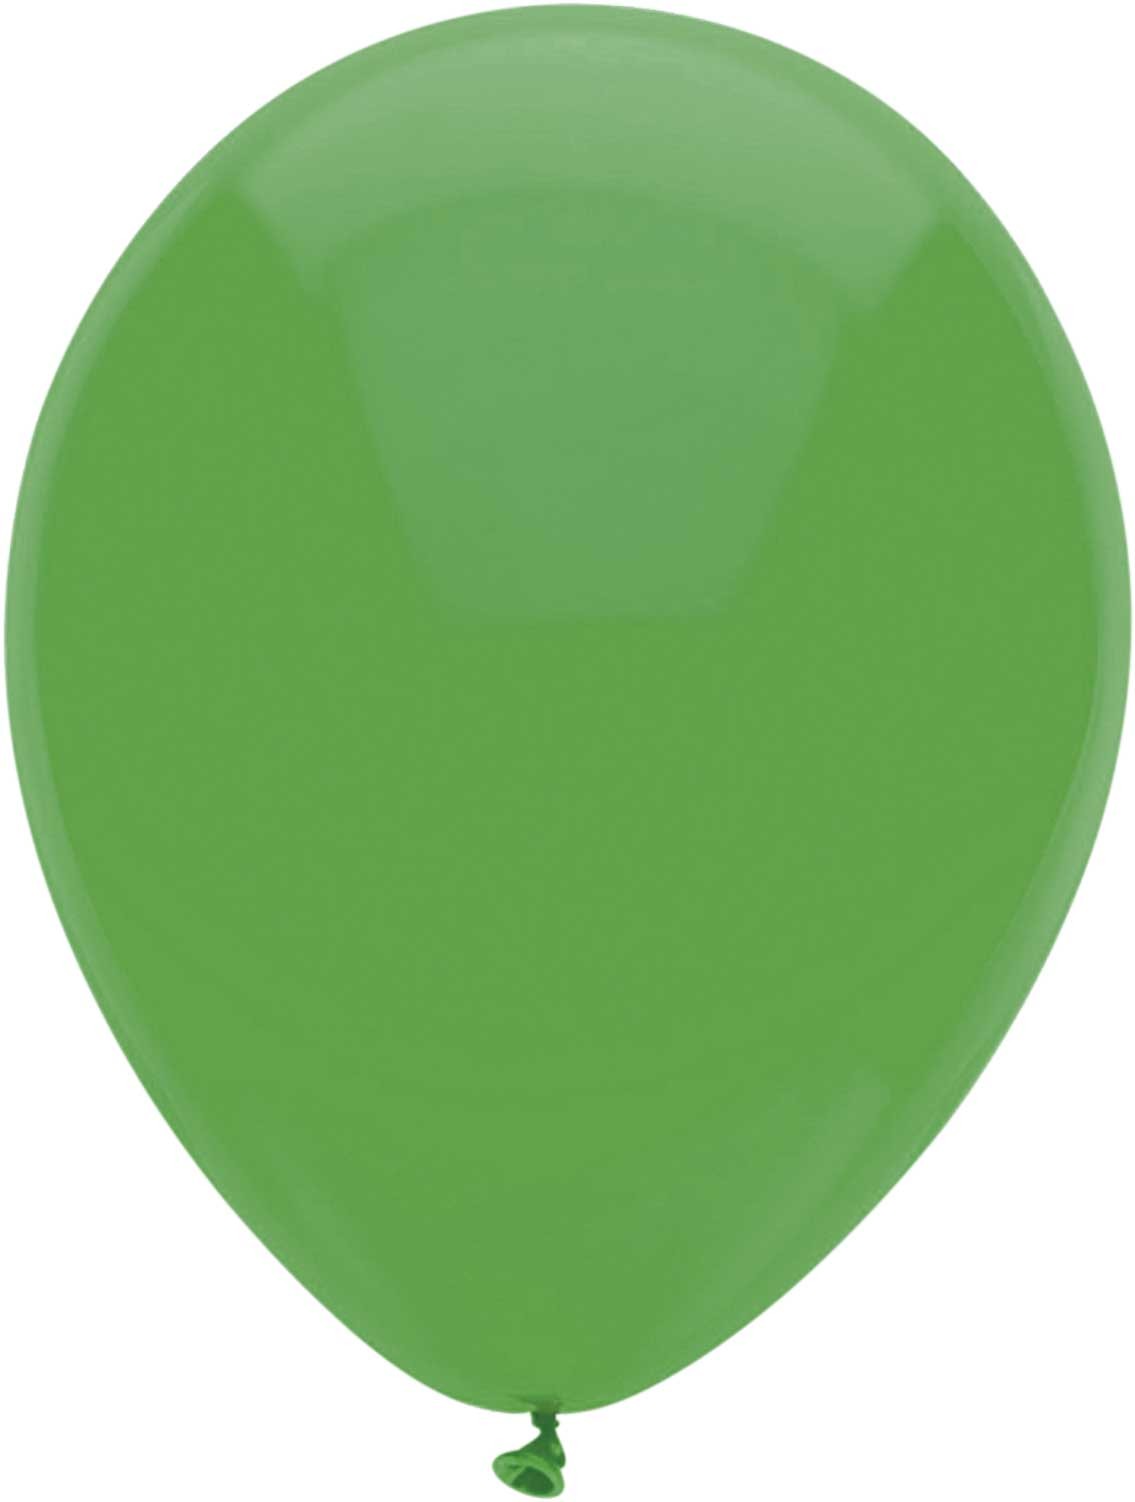 Balloons 30cm Green x 100 L / S